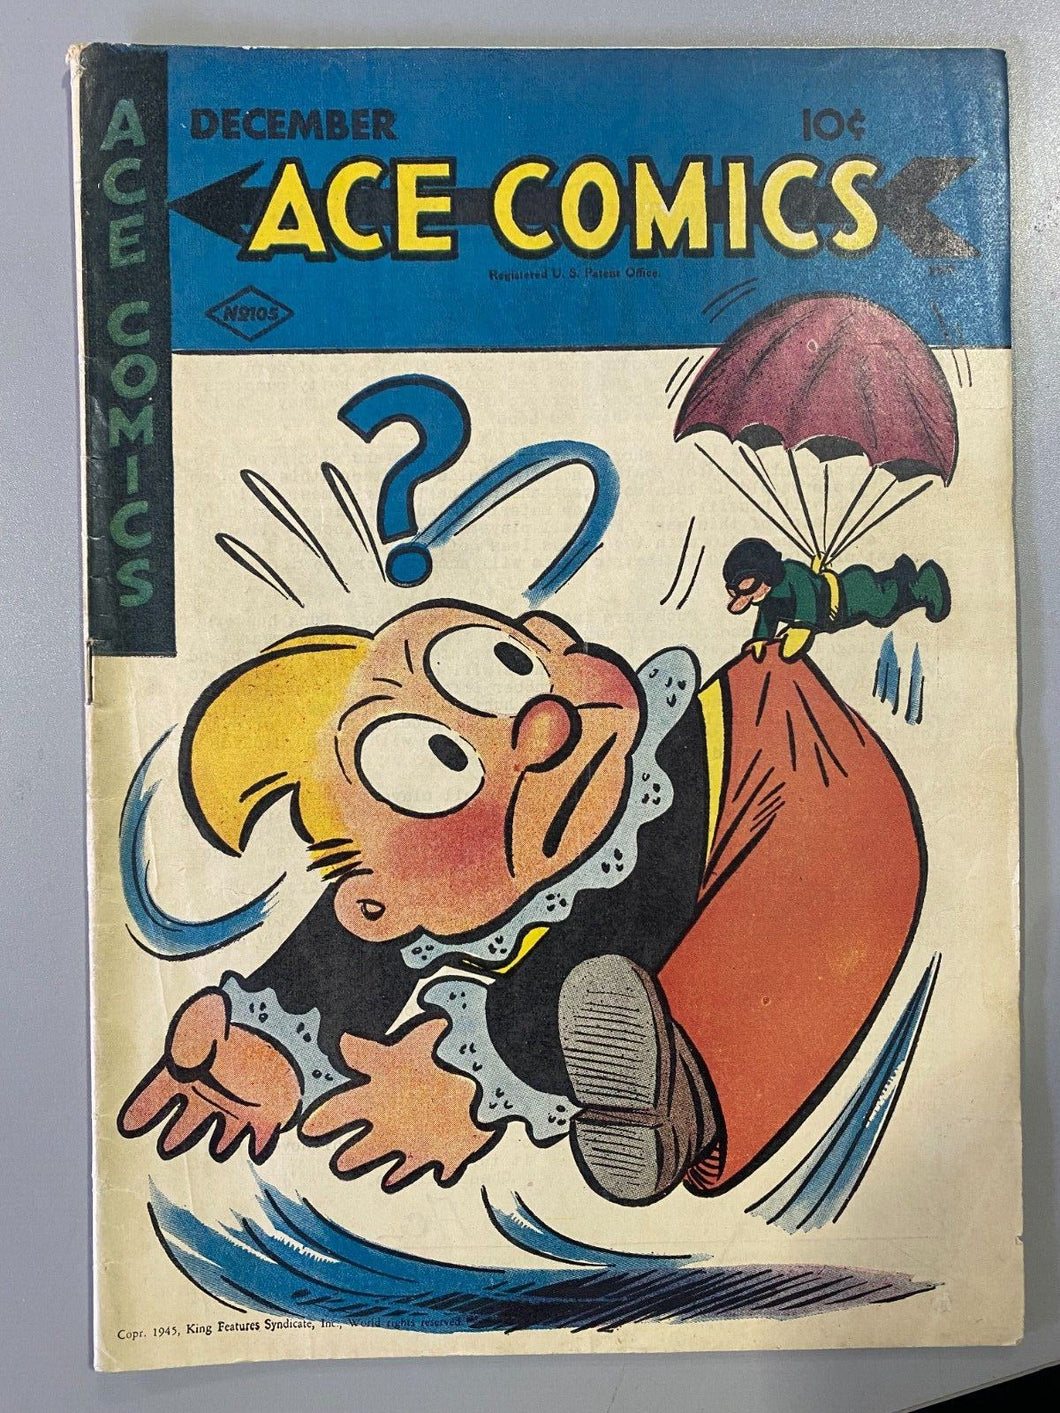 1945 Ace Comics Issue 105